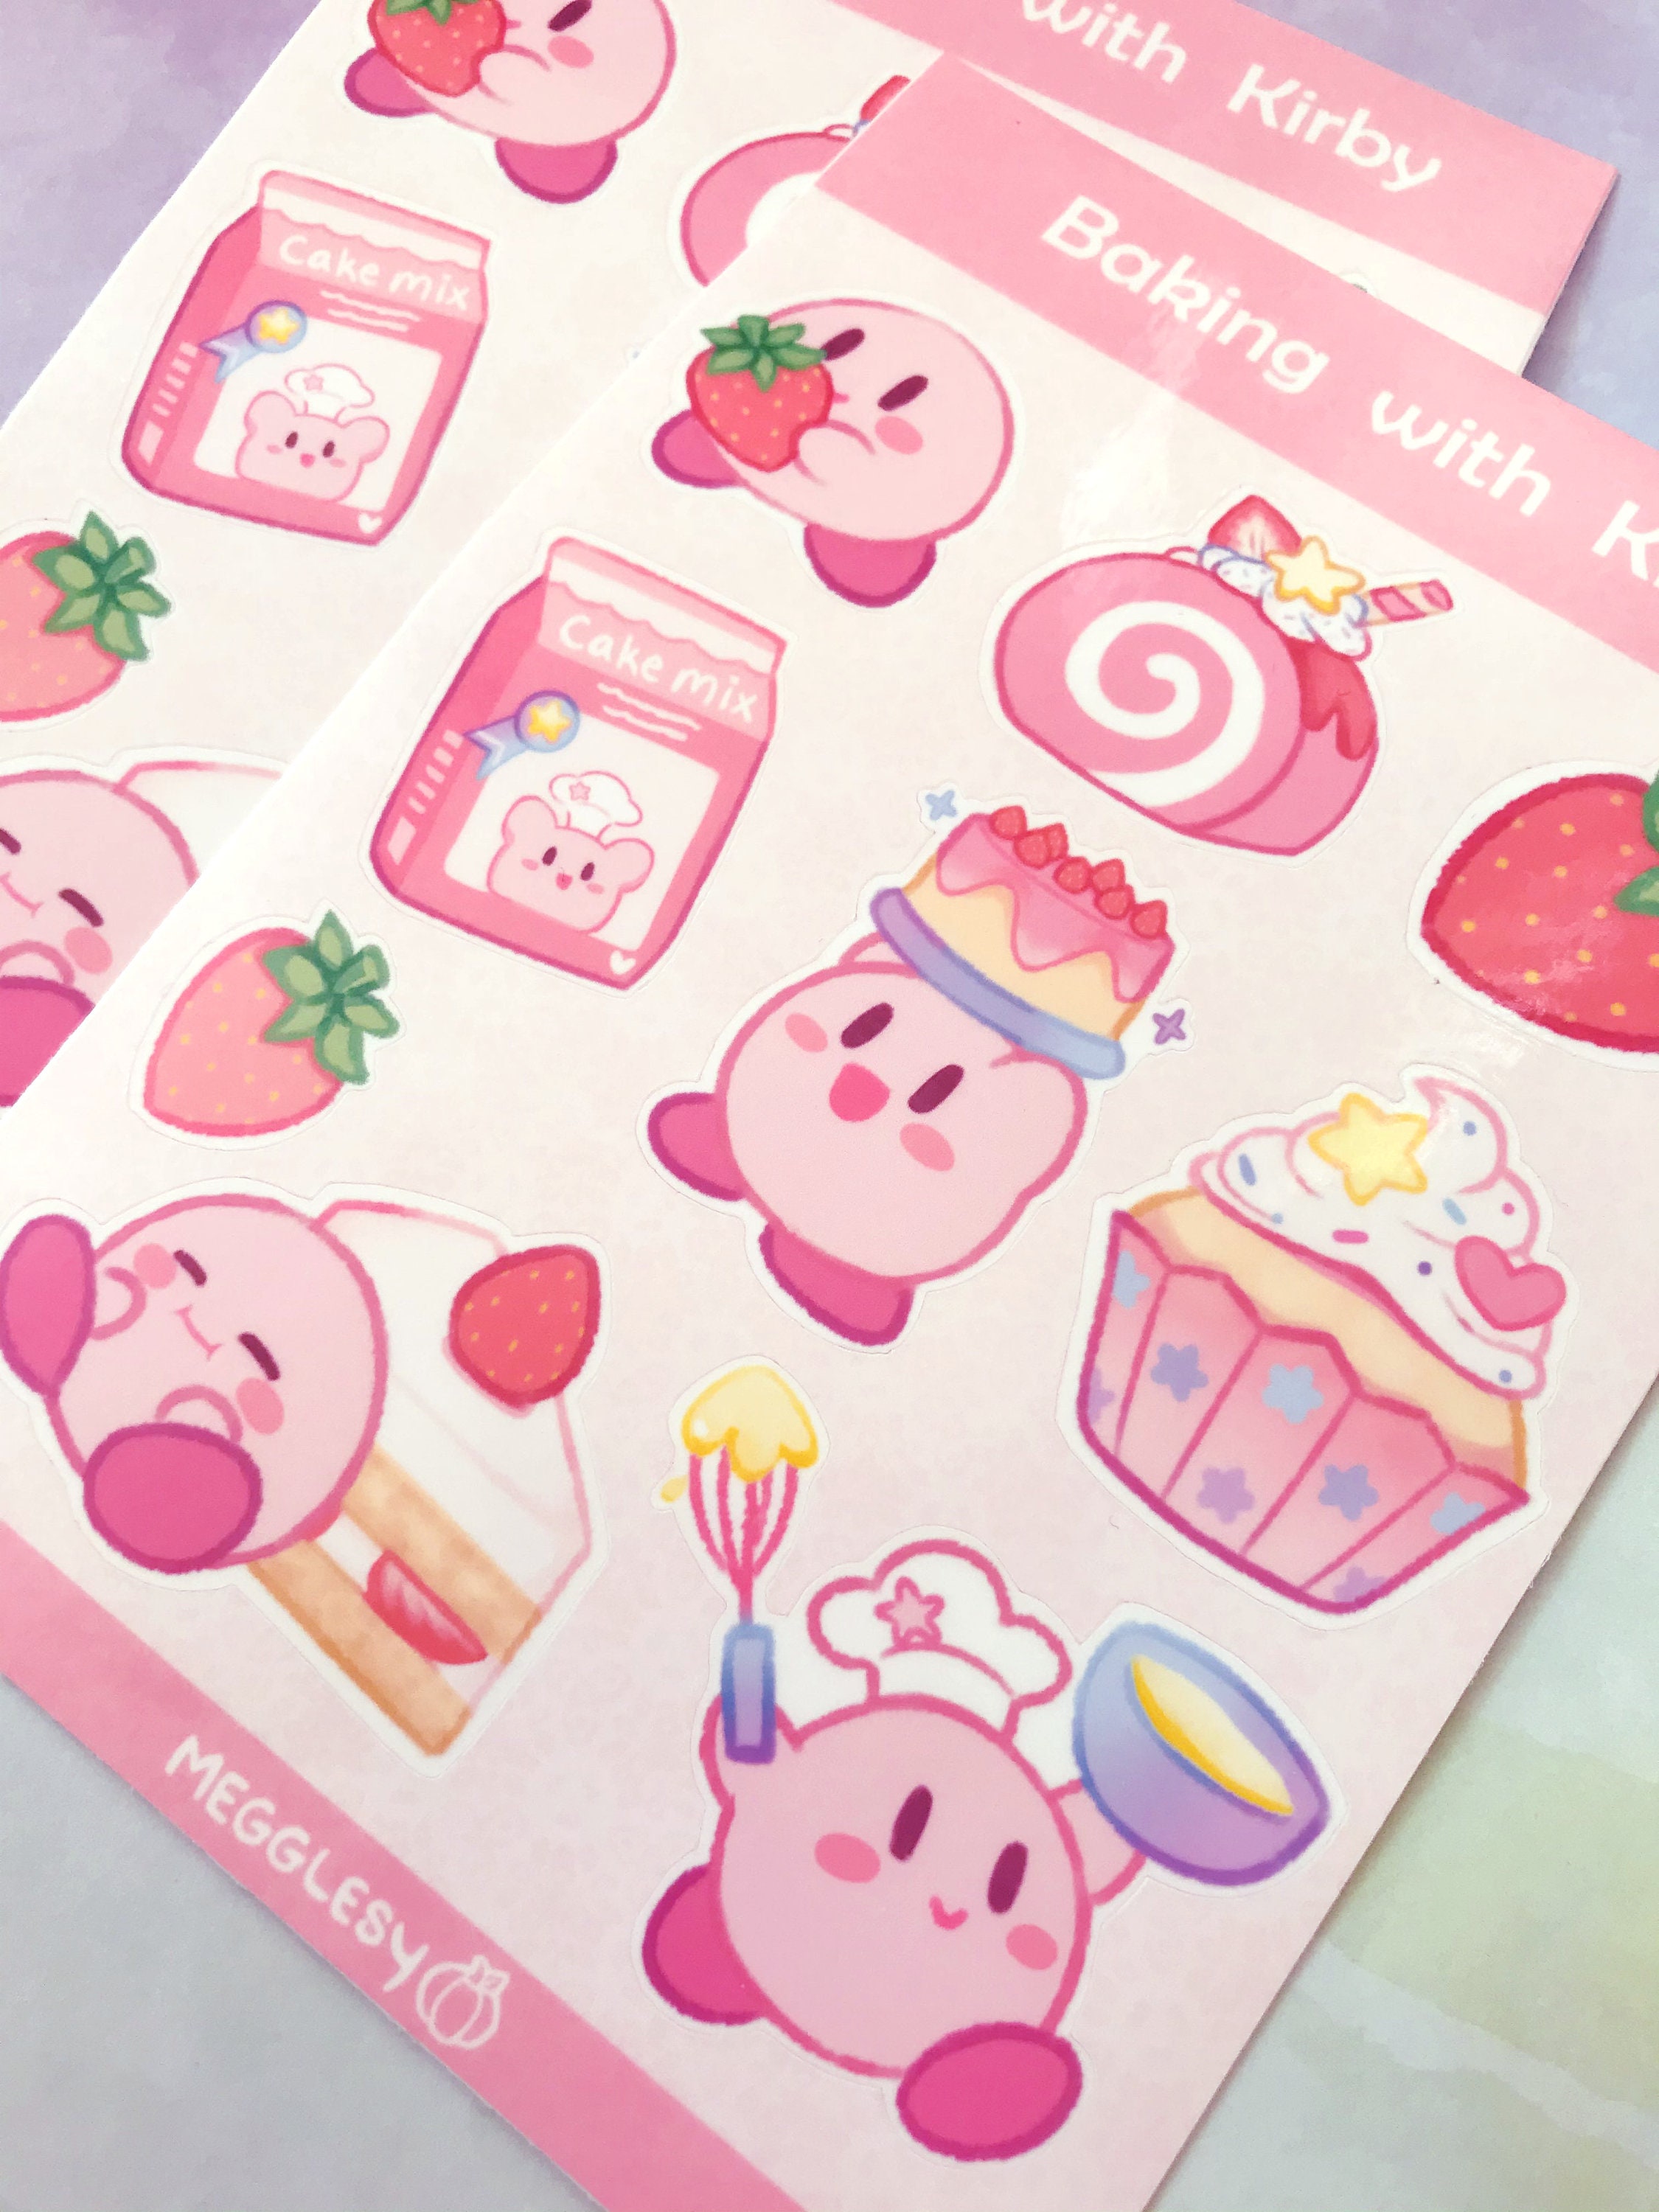 Baking With Kirby A6 Vinyl Sticker Sheet - Etsy